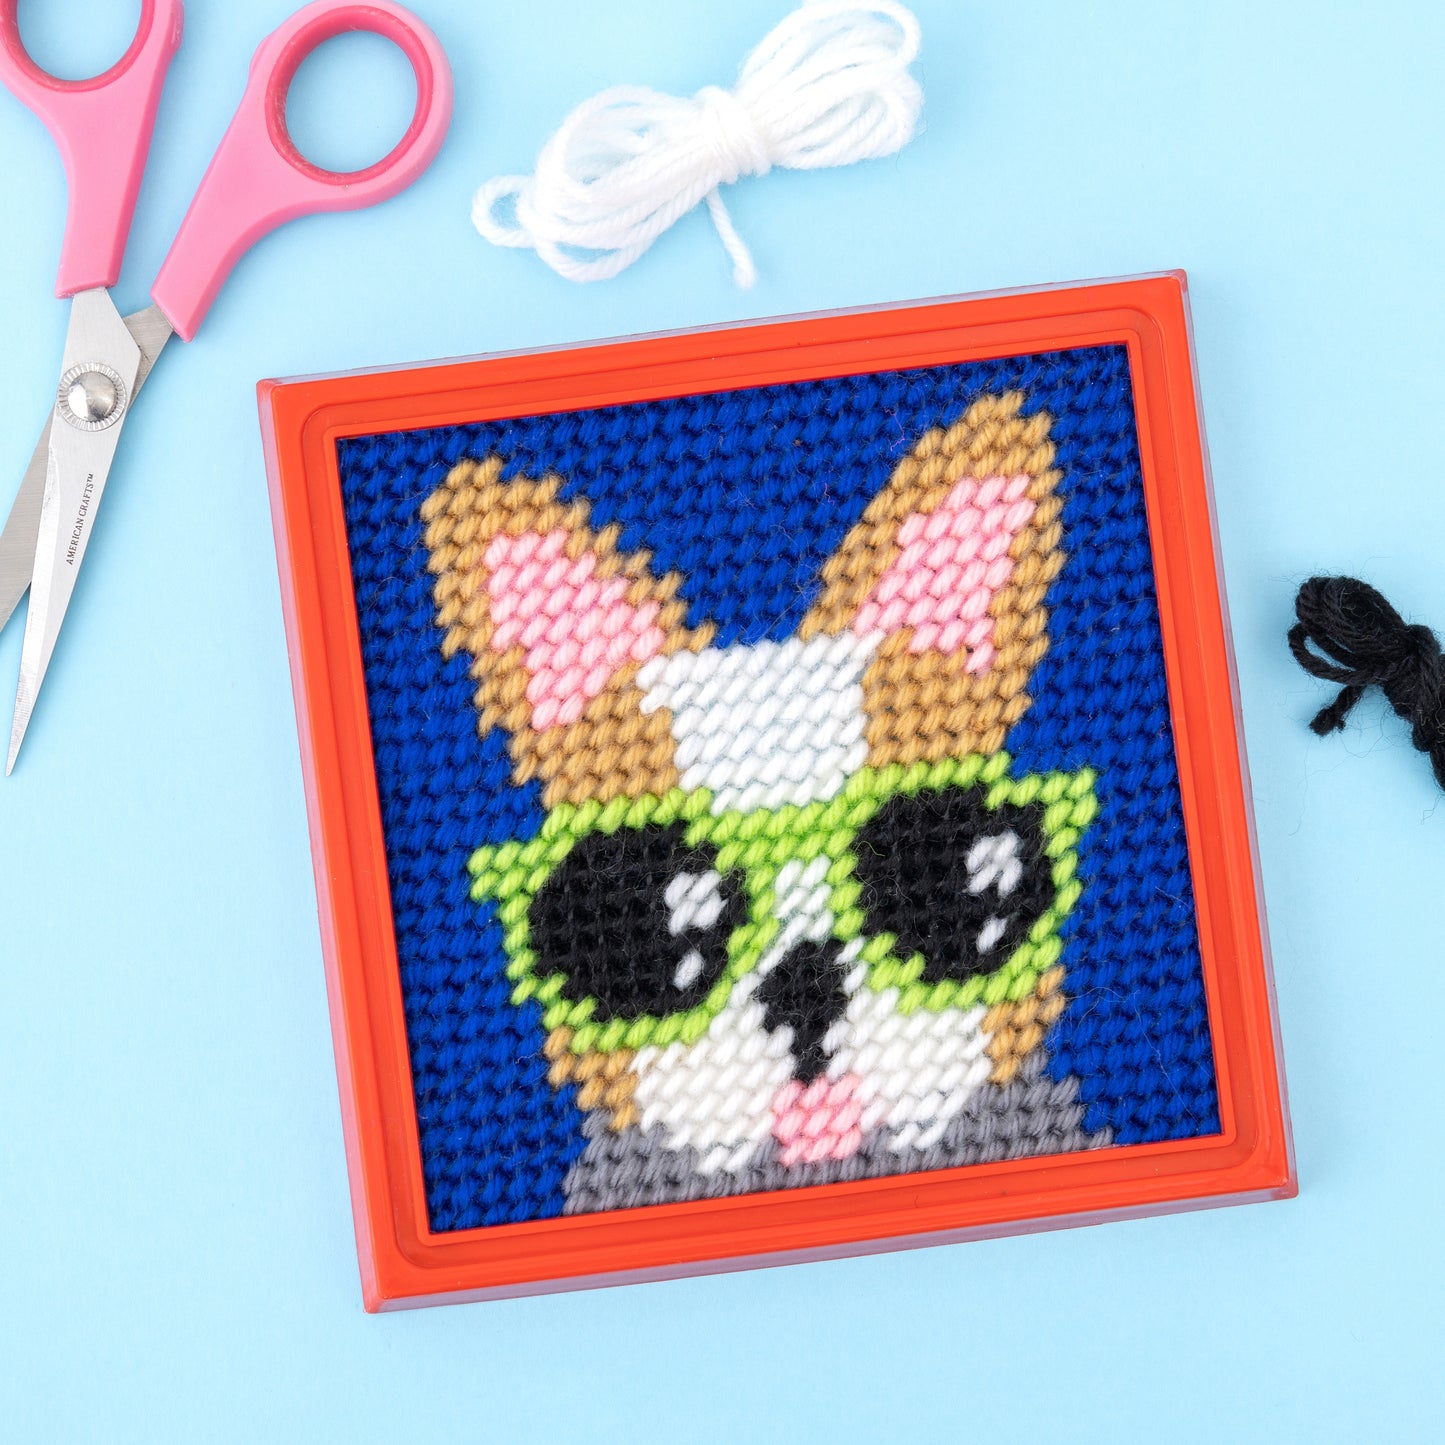 Sew Cute! Dog Needlepoint Kit-6"X6" Stitched In Yarn